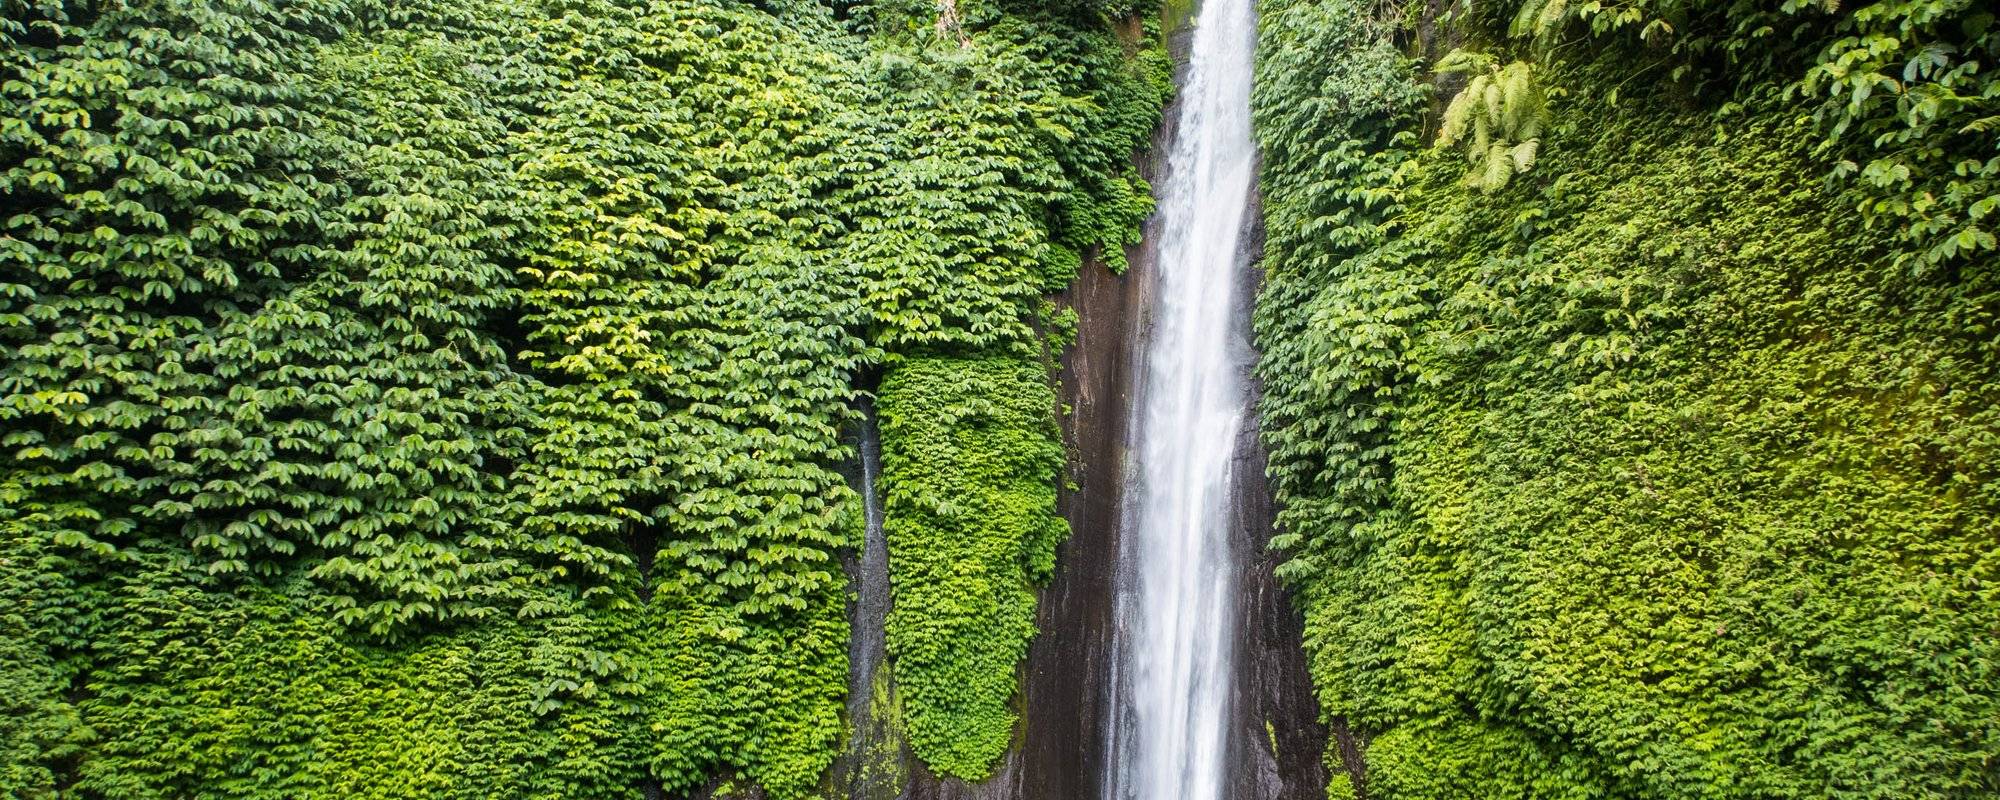 Easy Trekking to Munduk Waterfall in Munduk Village, Bali, Indonesia